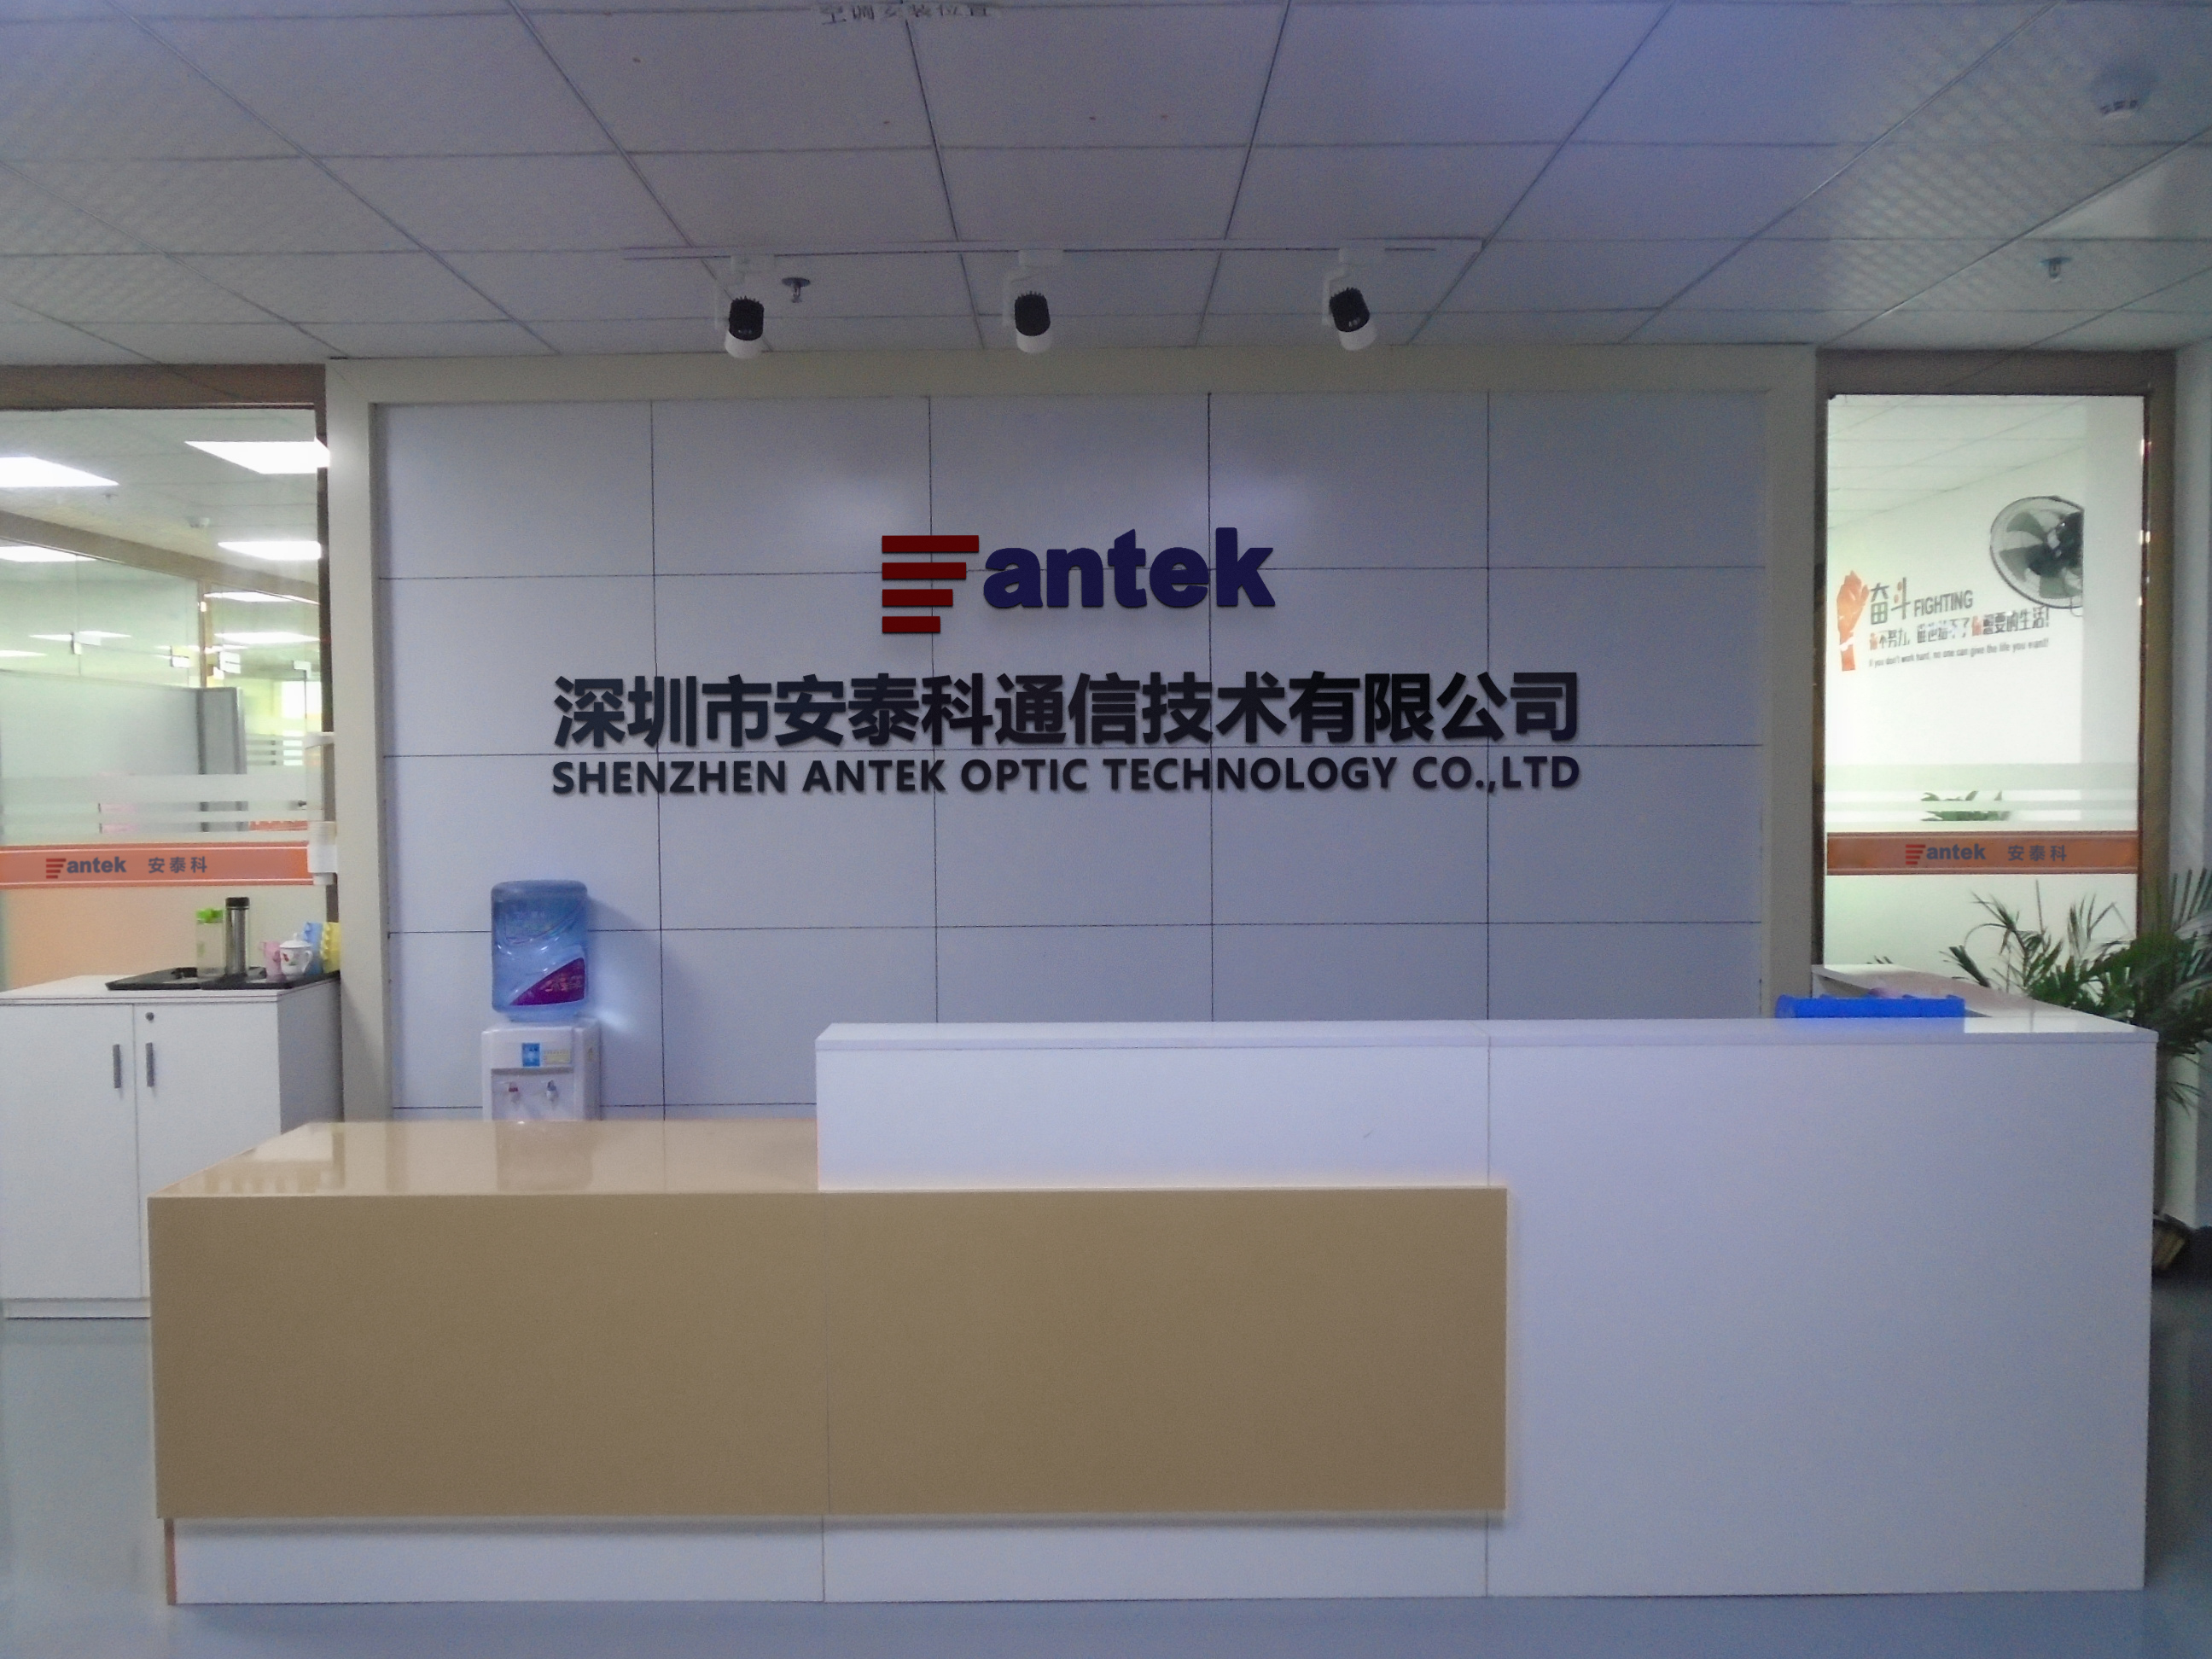 Shenzhen Antek Optic Technology Co.,Ltd.